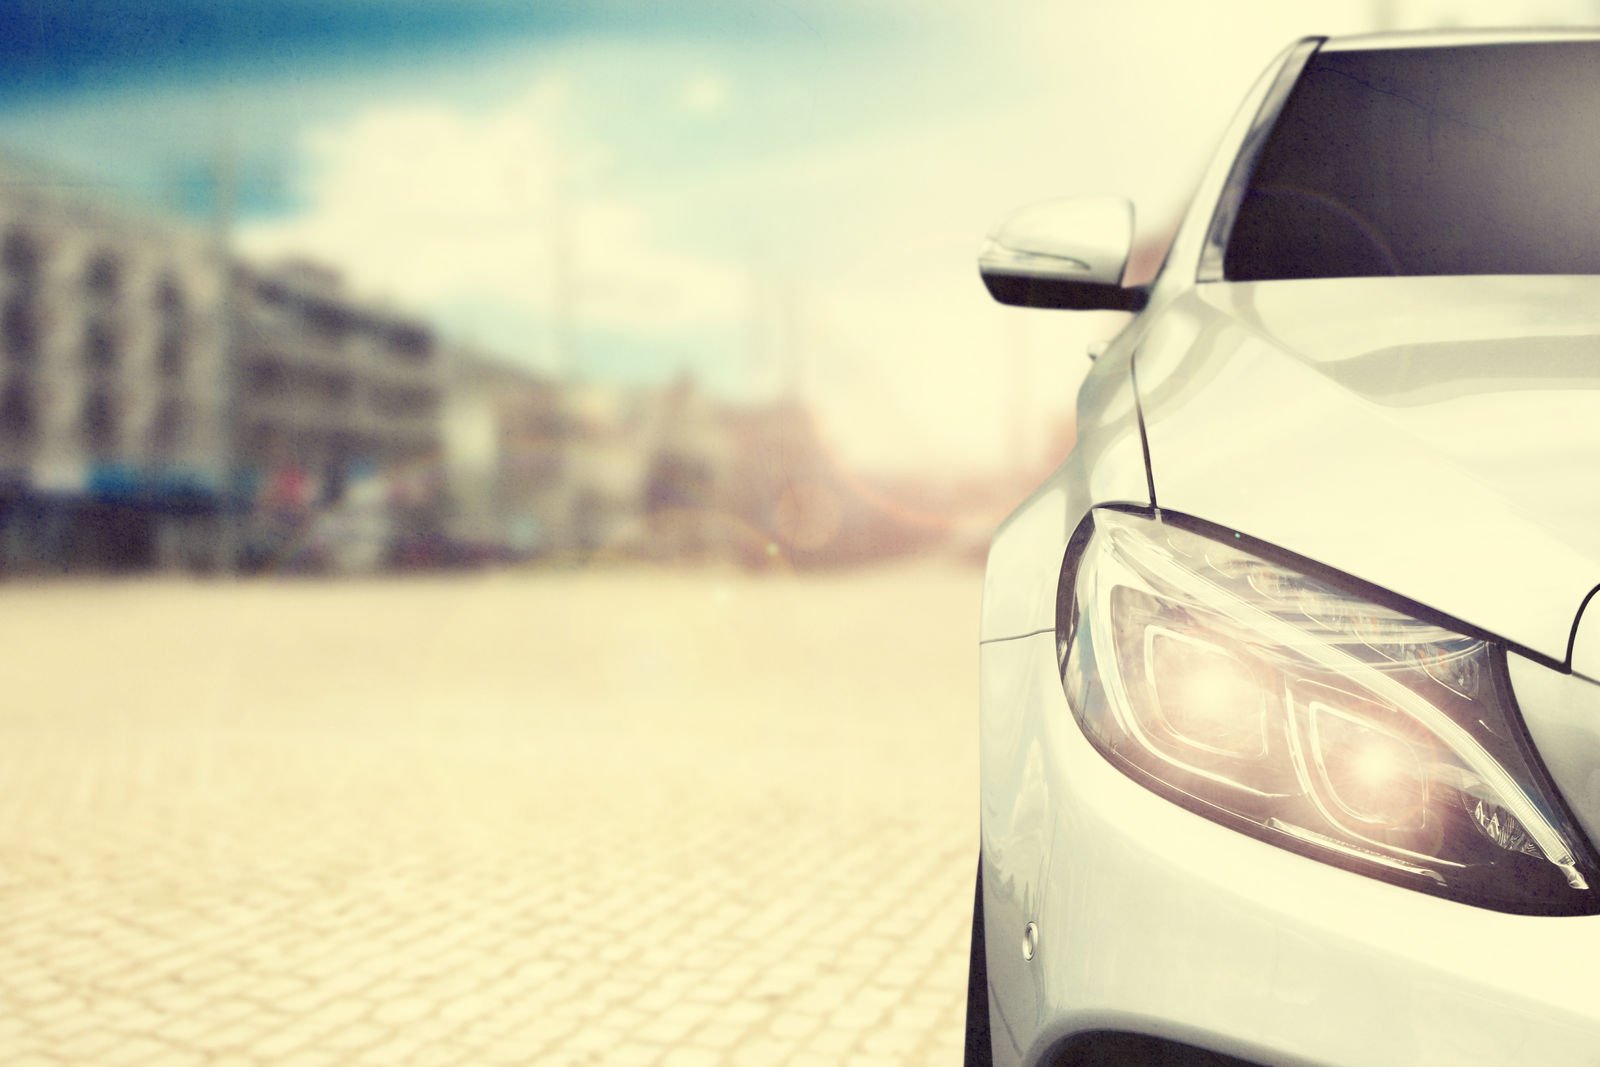 Audi Auto Insurance vs BMW Auto Insurance